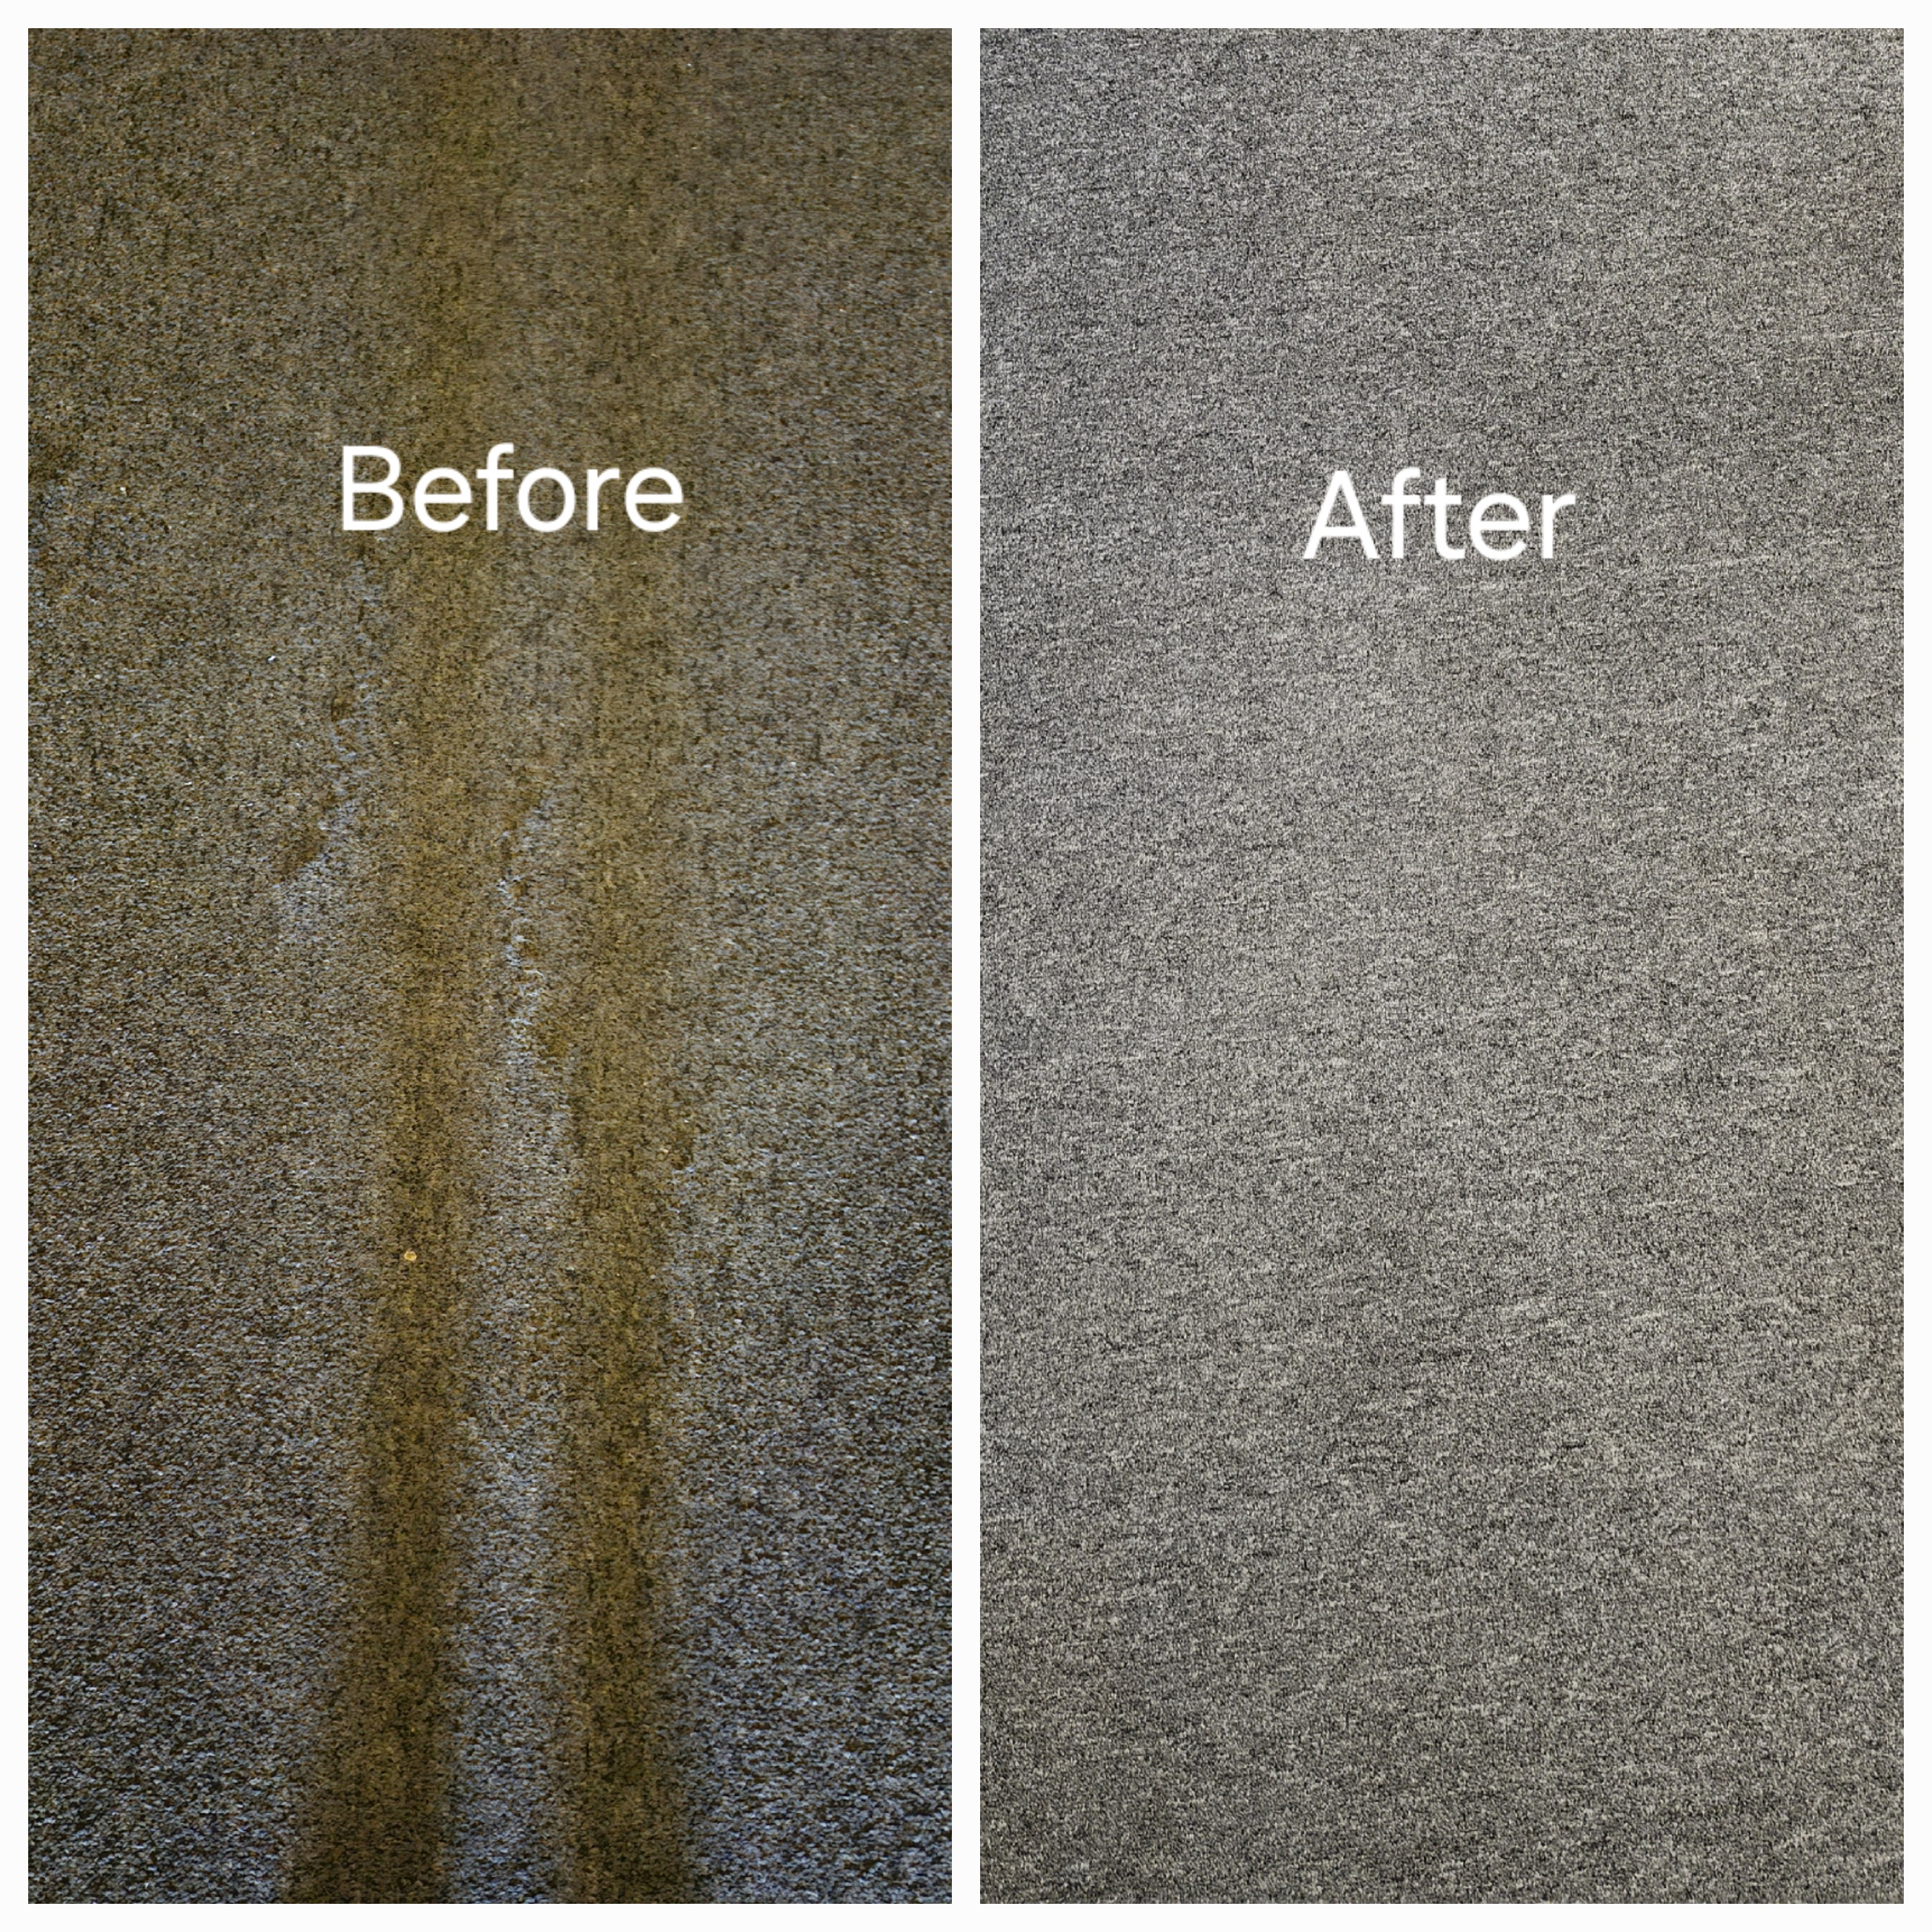 Duluth GA Professional Carpet Cleaning.jpg